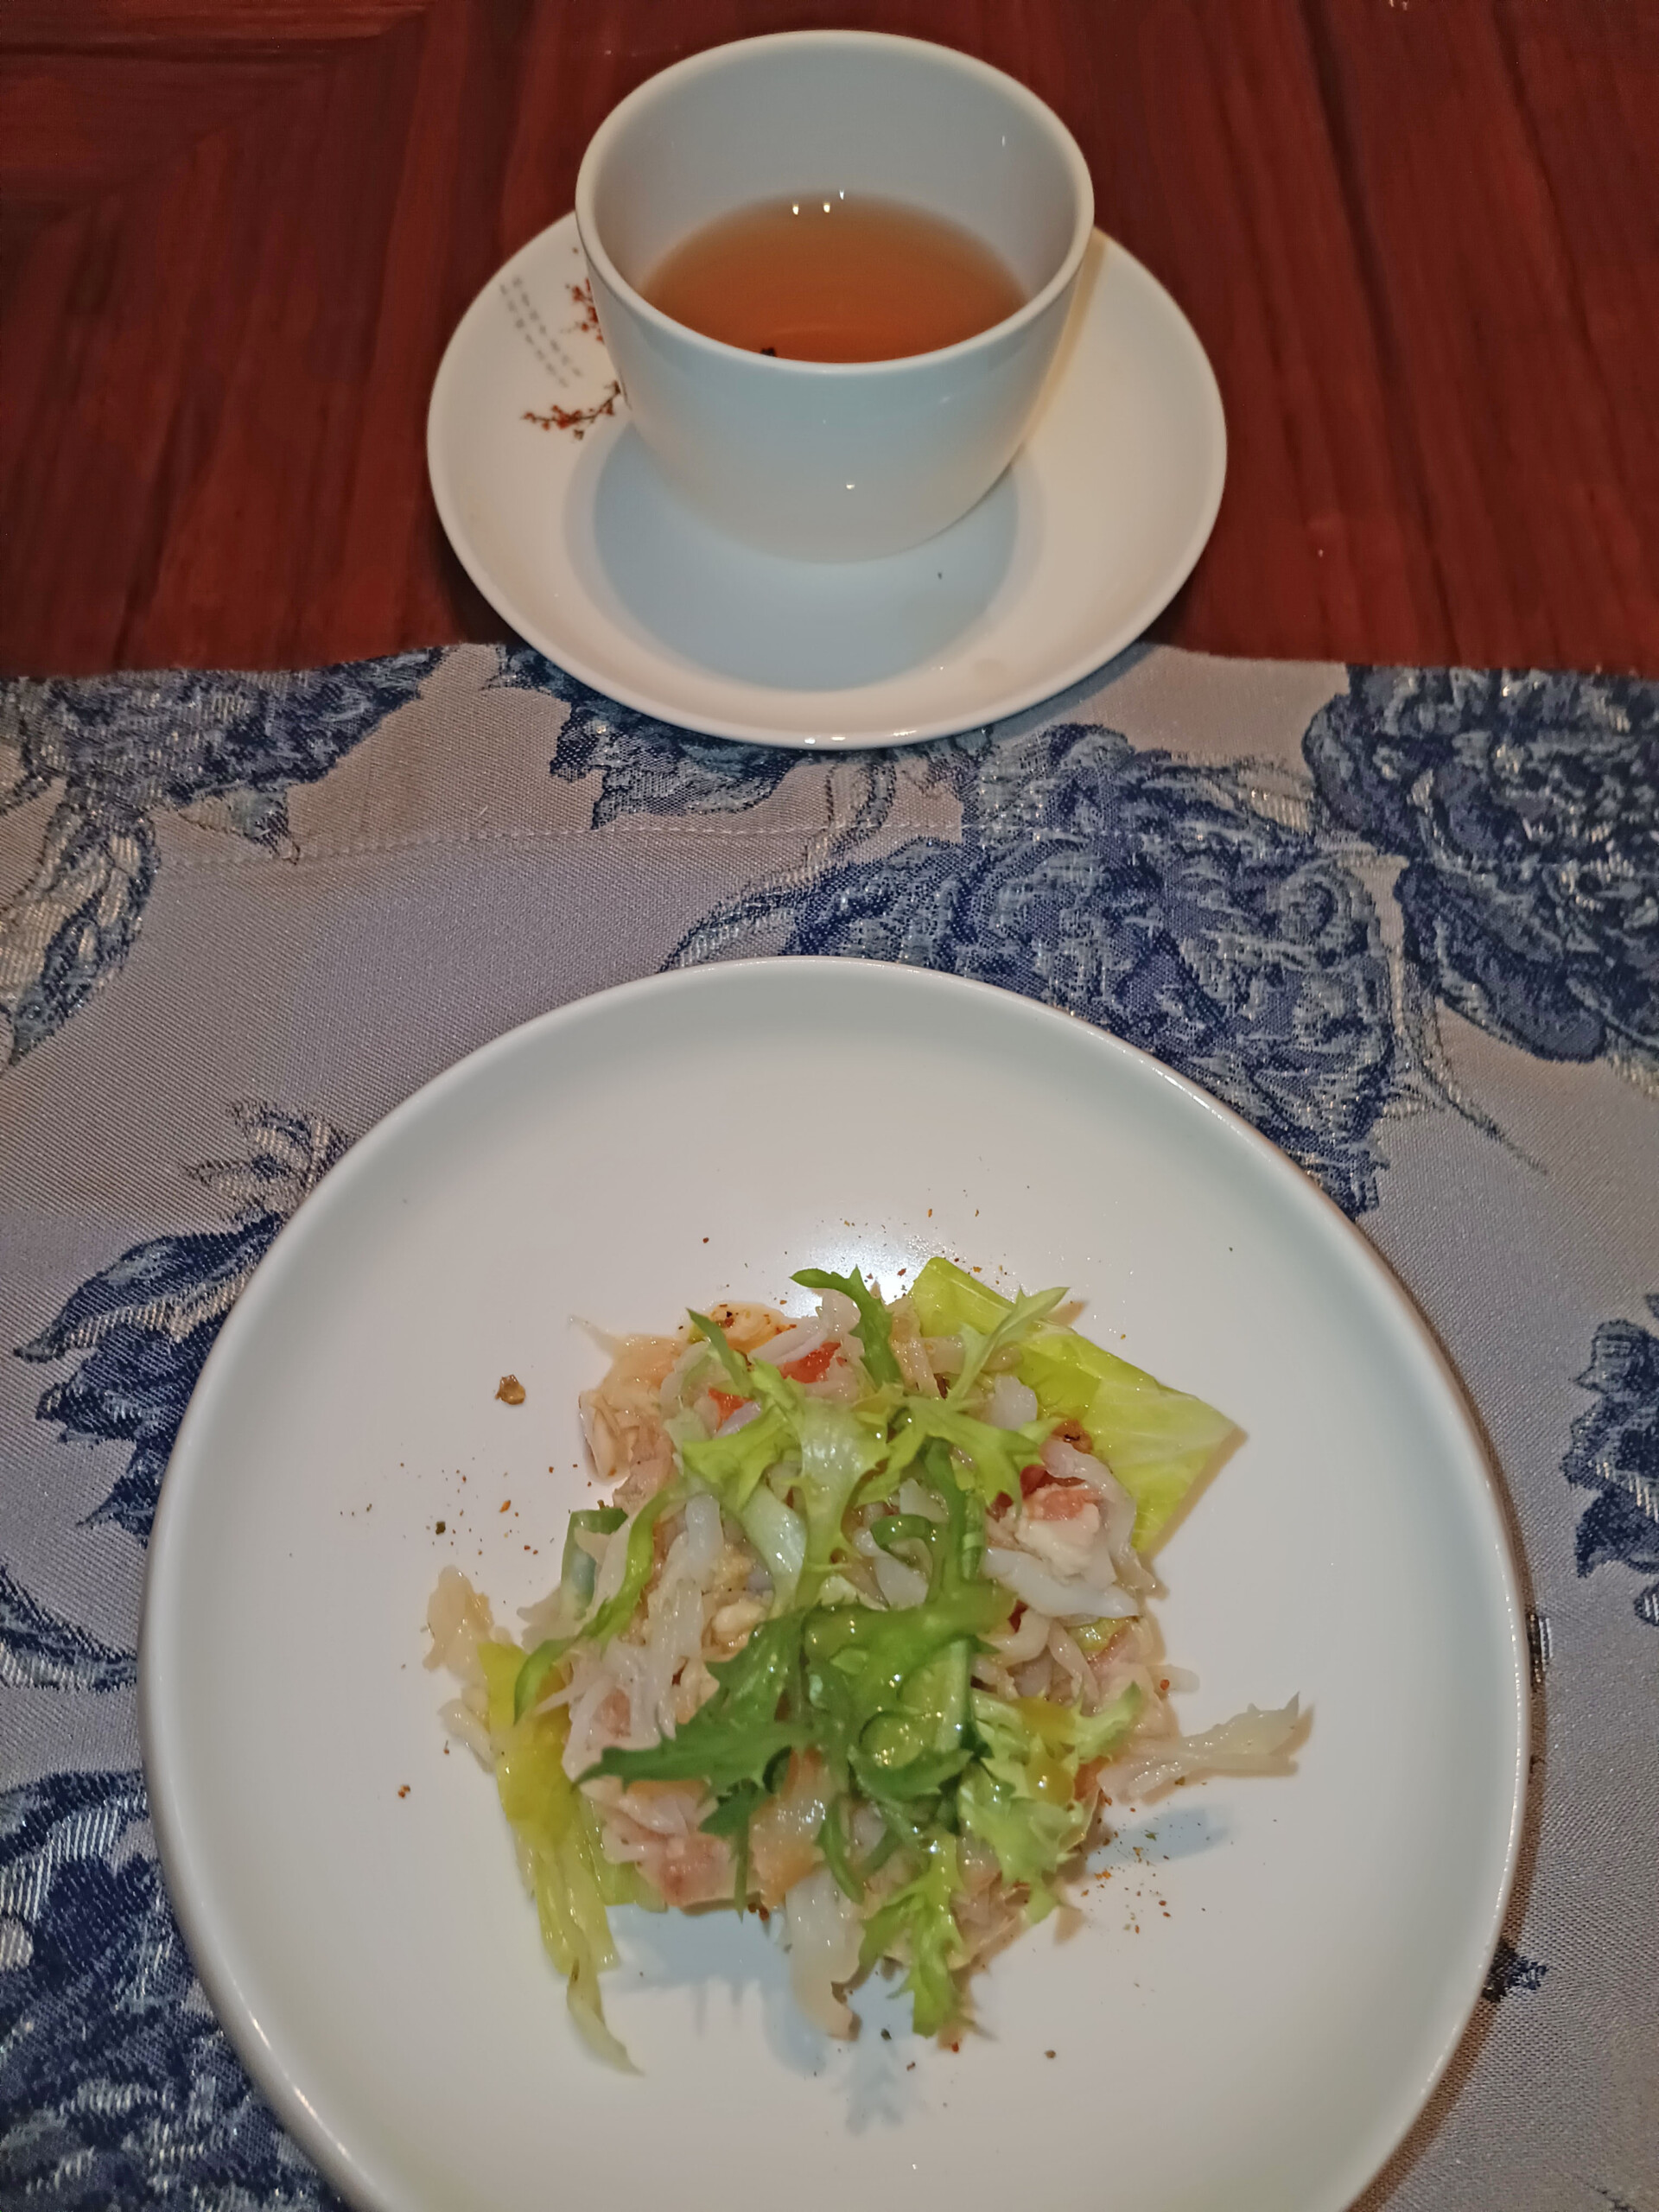 King Crab Avocado and Mango Salad with Pomelo Dressing, and Pu'er tea